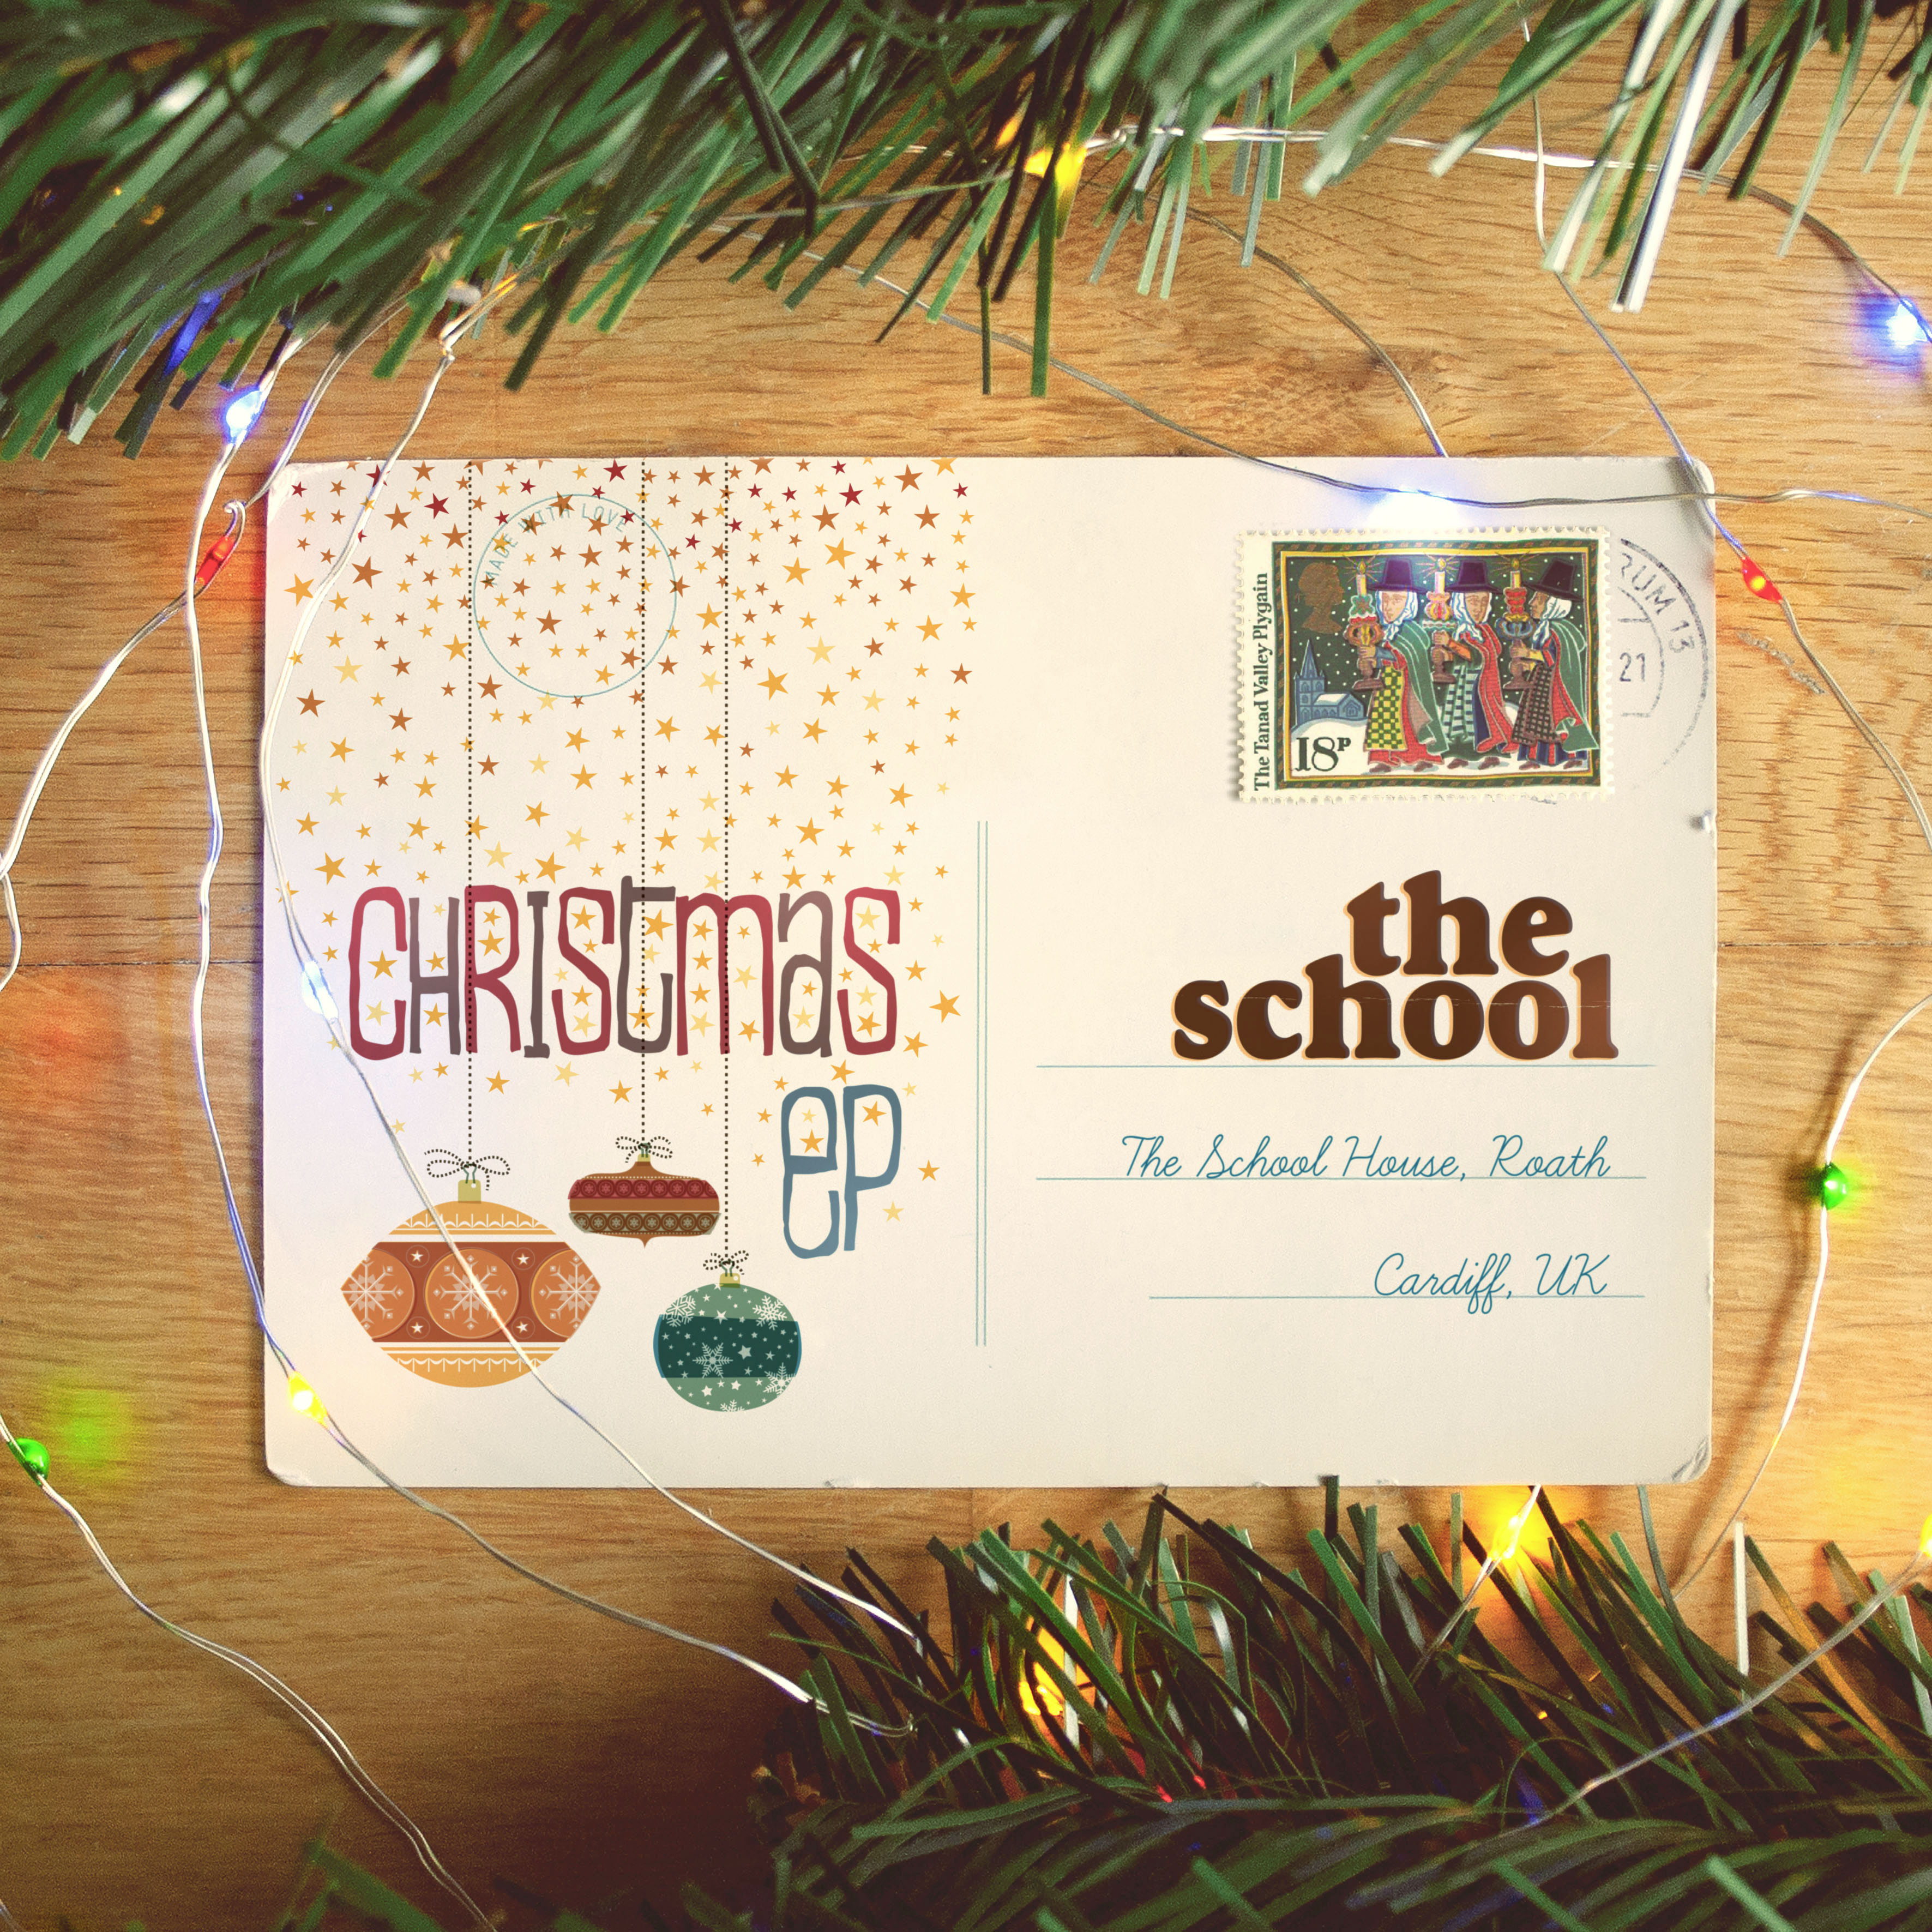 The School "Christmas EP" Single Digital